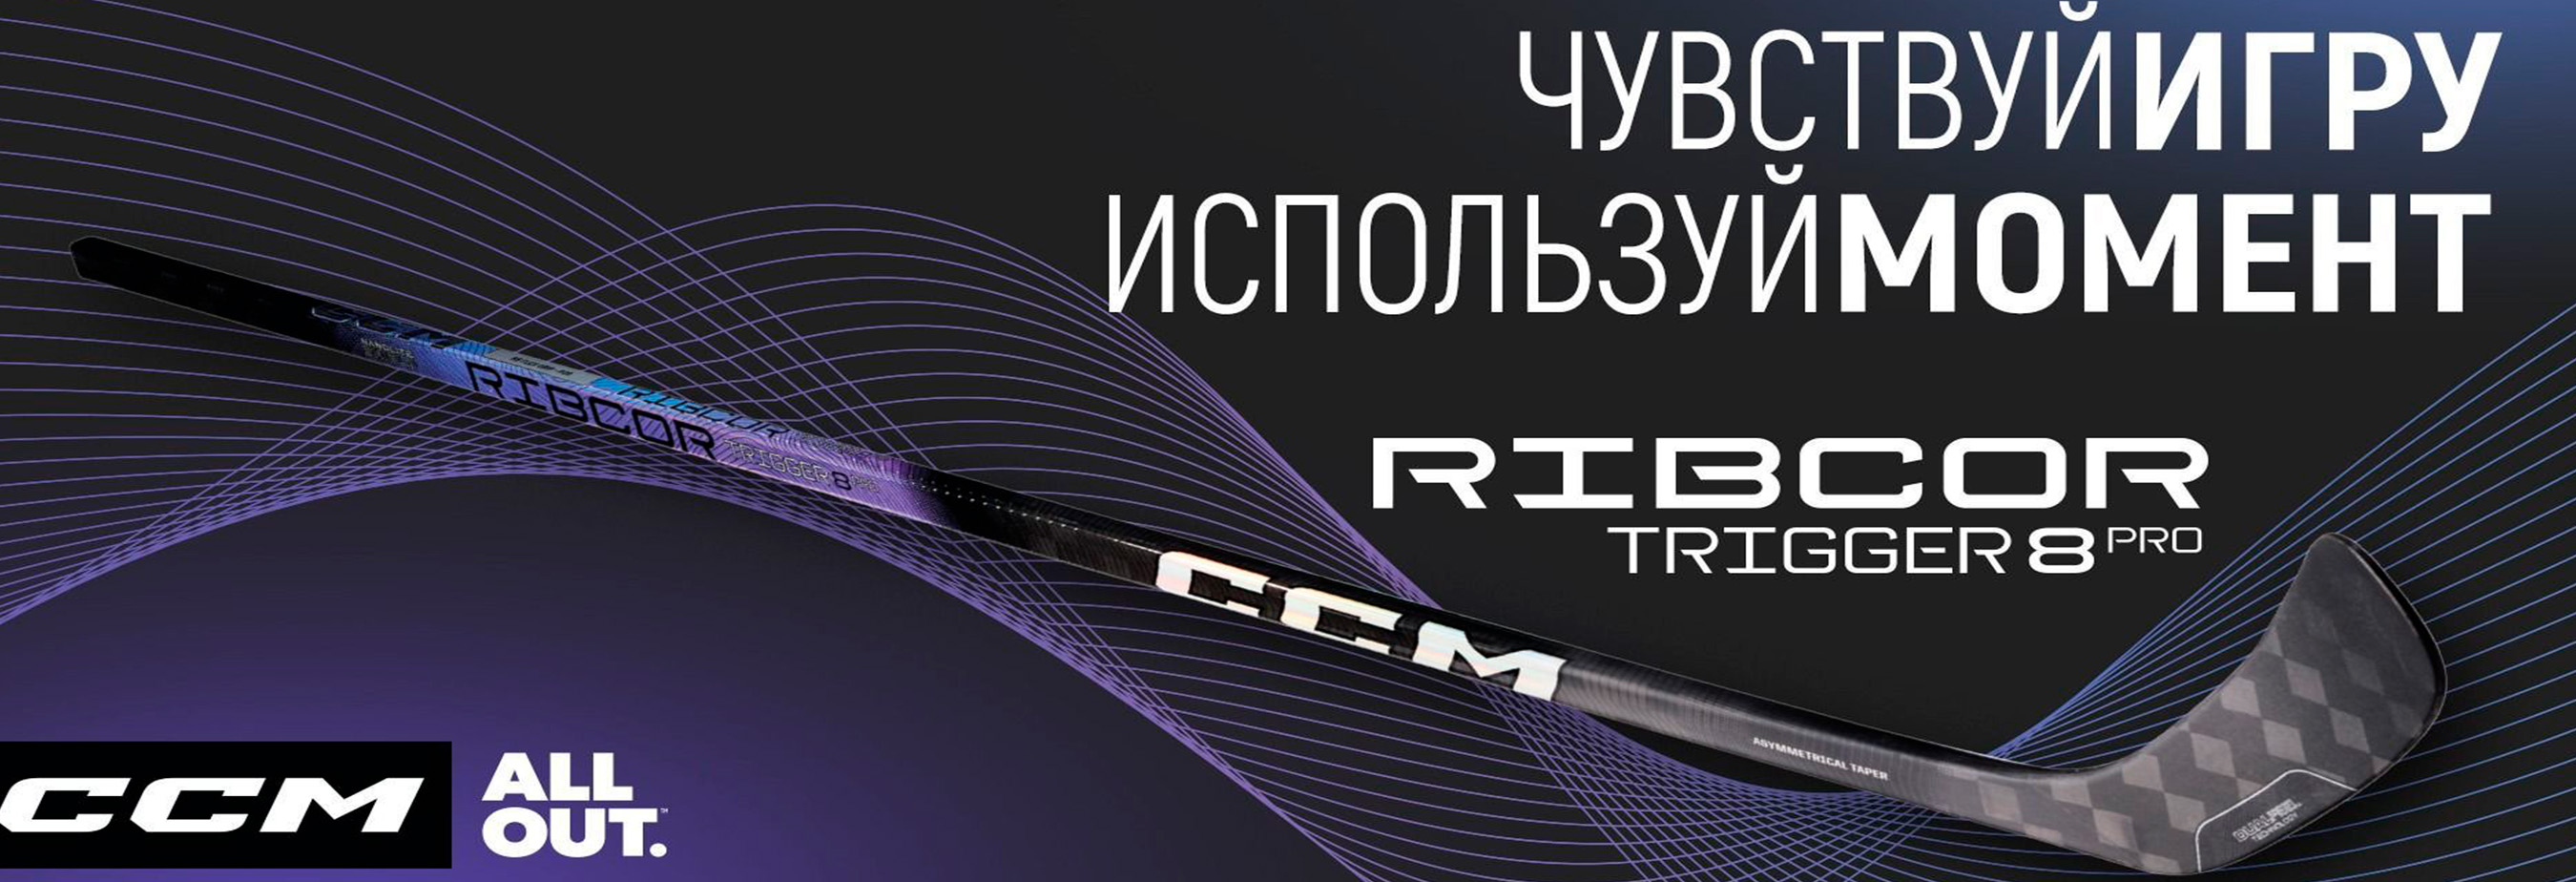 Клюшки CCM Ribcor Trigger 8 Rro уже в продаже!